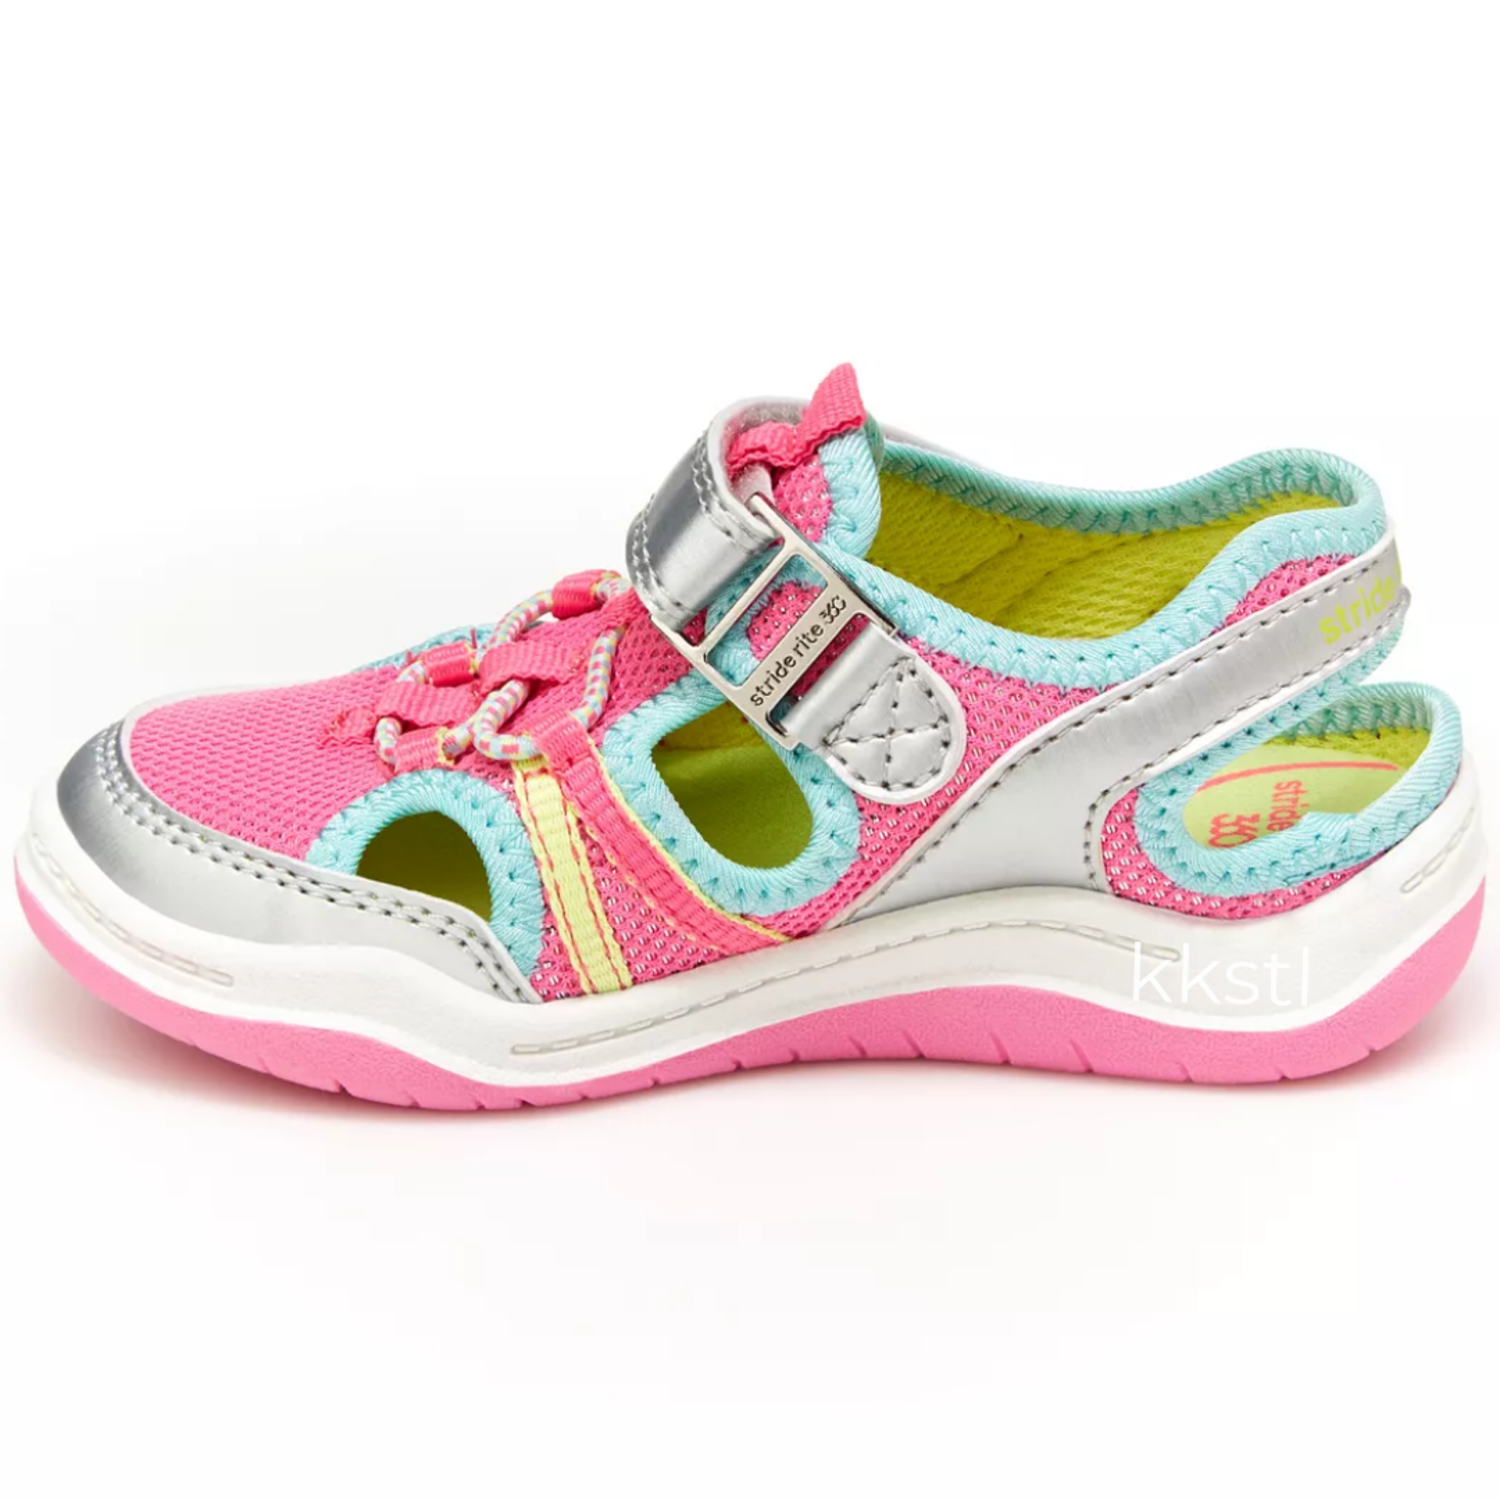 Stride Rite Fin Pink Multi - Kids Shoes in Canada - Kiddie Kobbler 